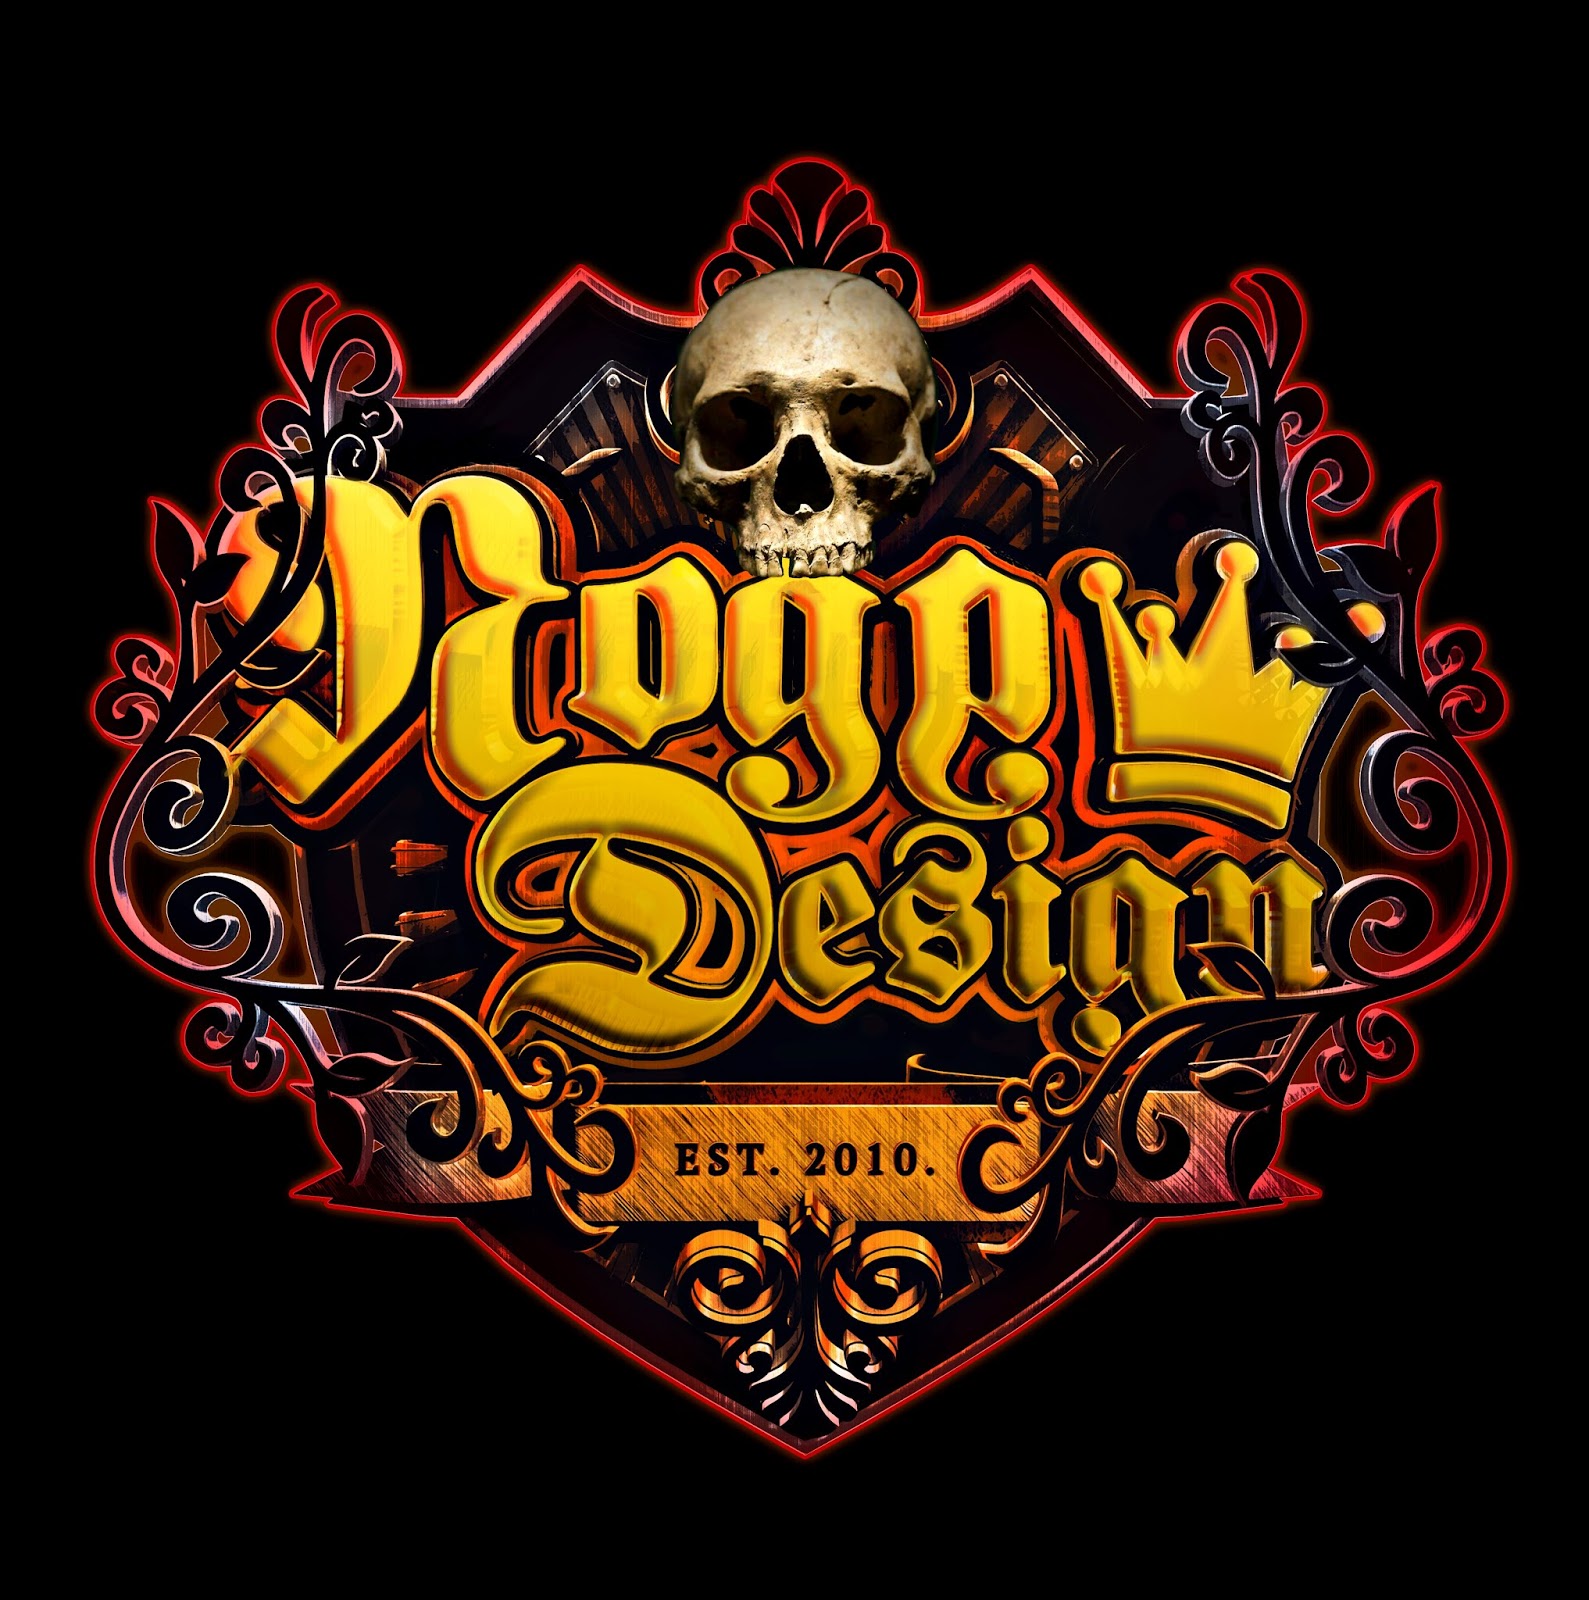 Noggdesign: New logo update